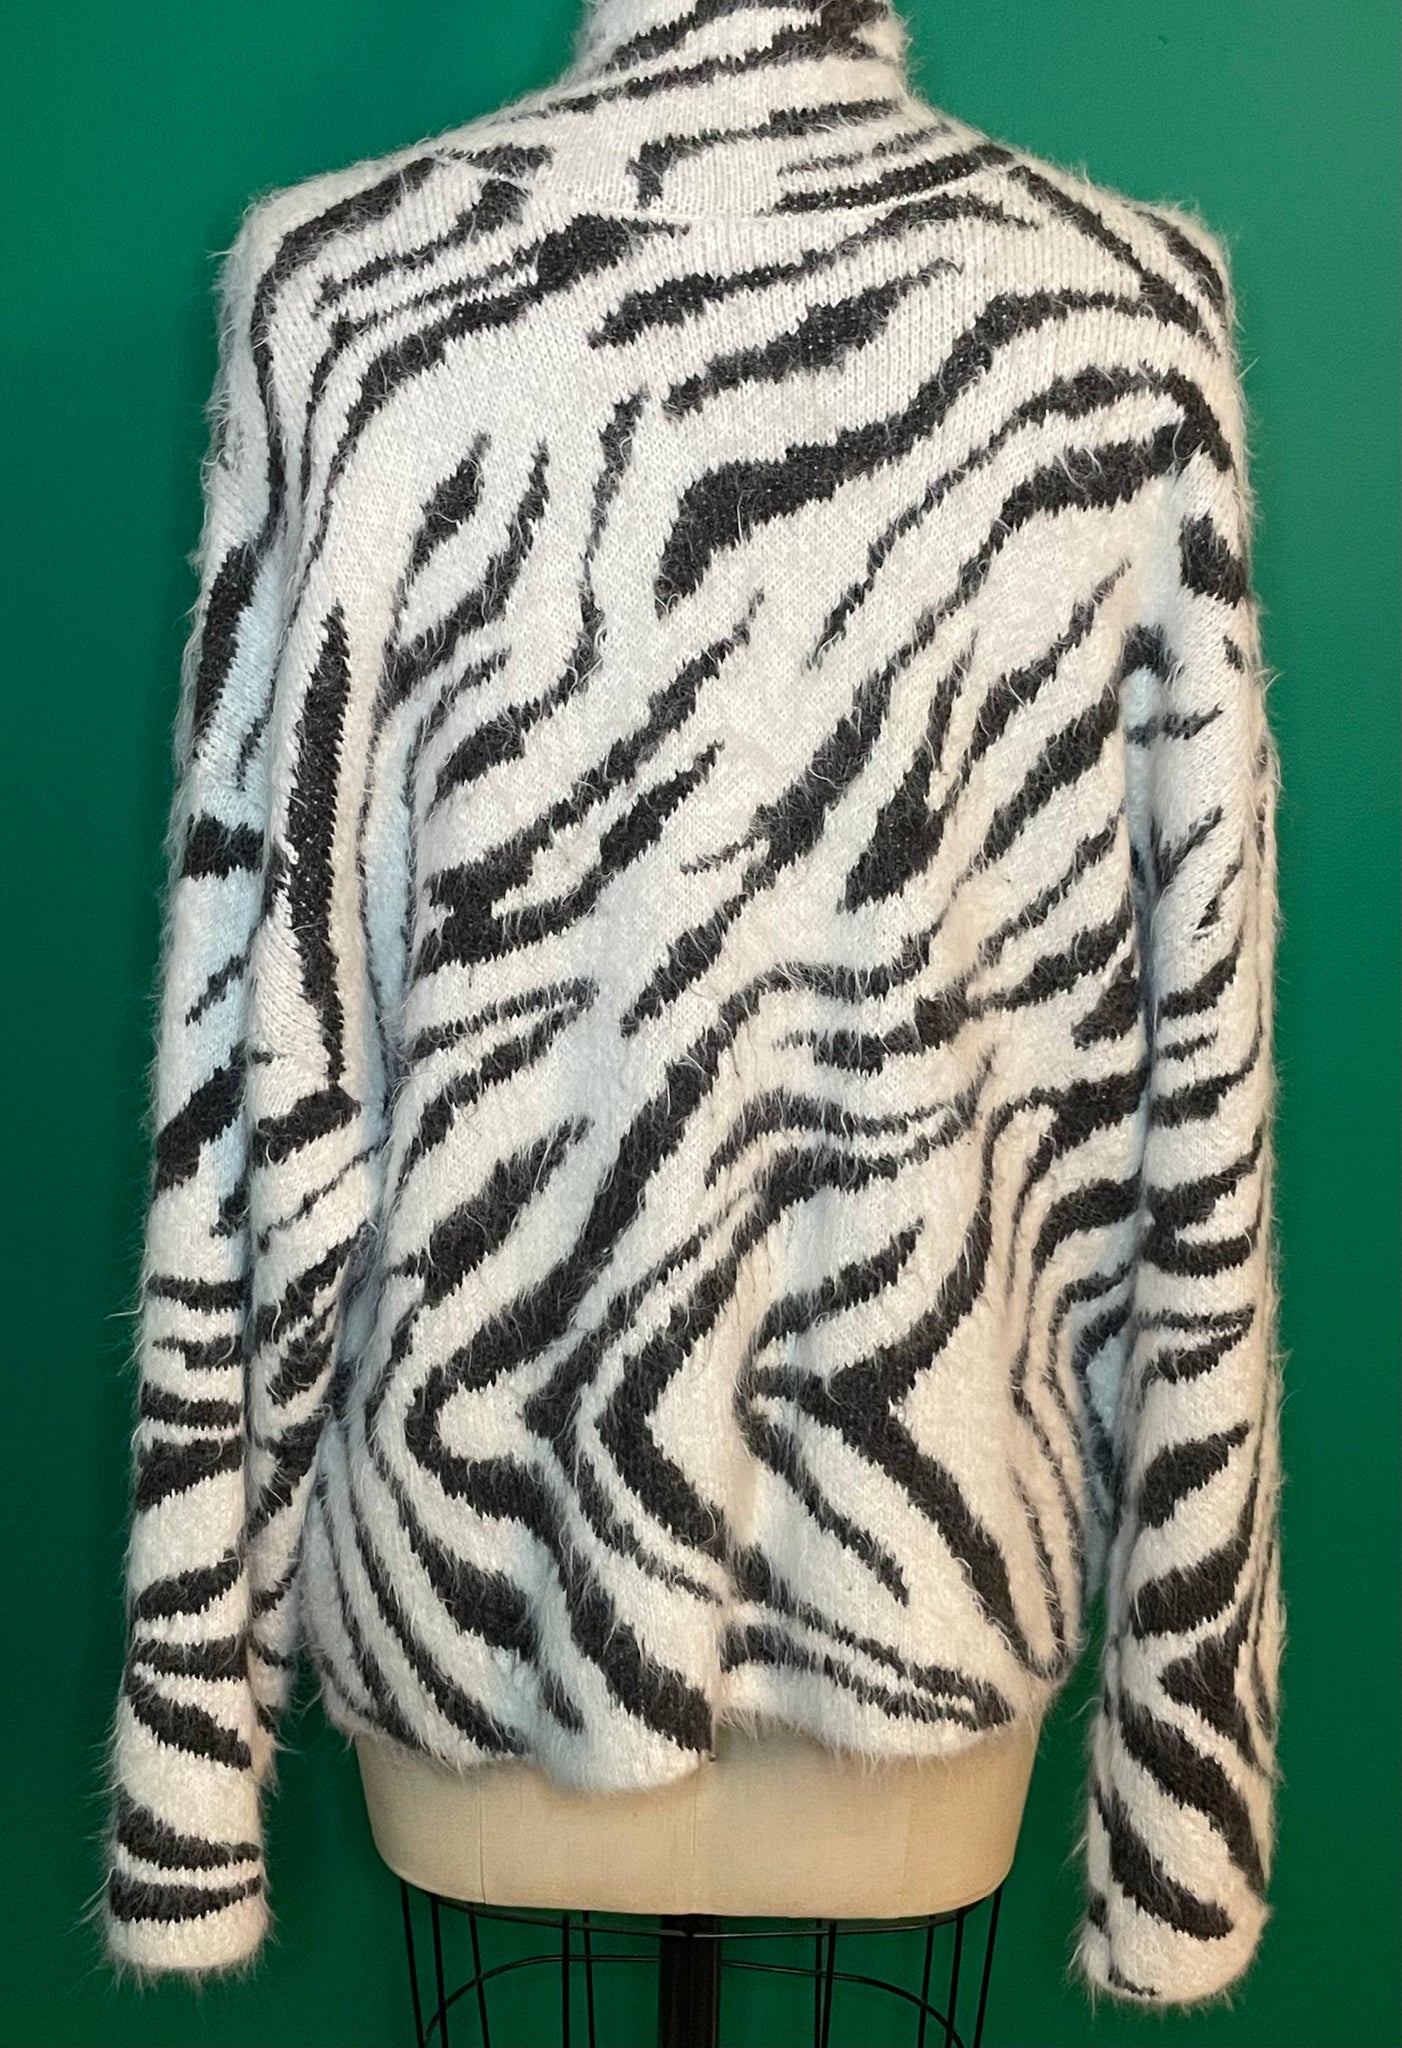 Zebra print sweater (S/M)